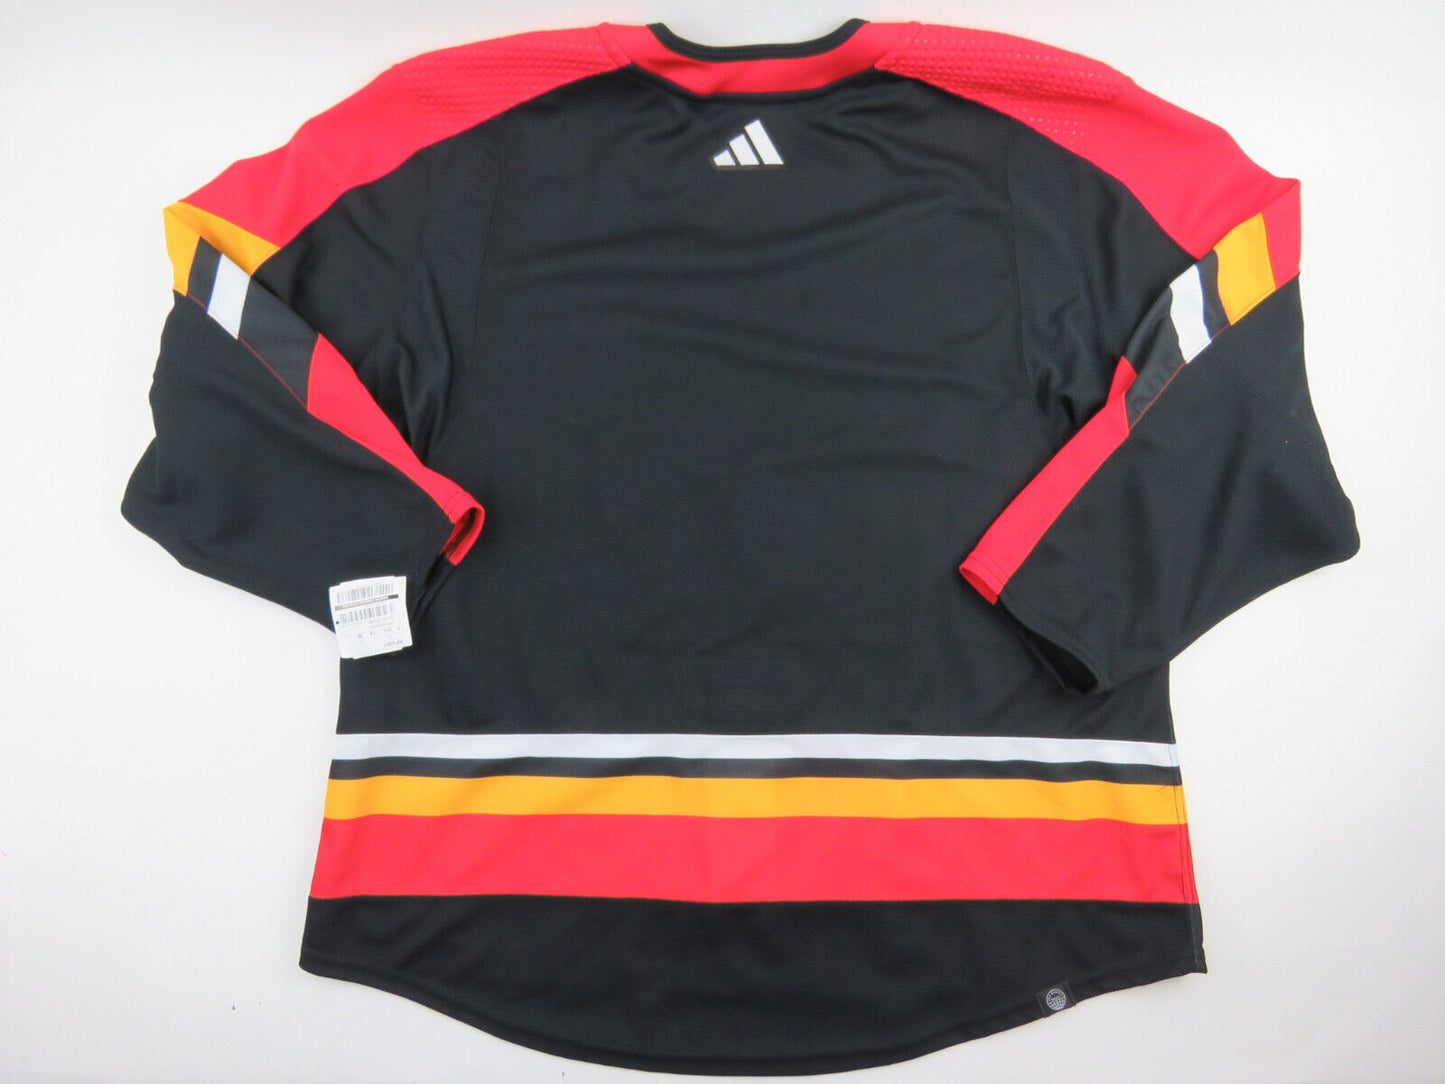 Calgary Flames Reverse Retro 2.0 Team Issued NHL Pro Stock Hockey Jersey 58 MiC